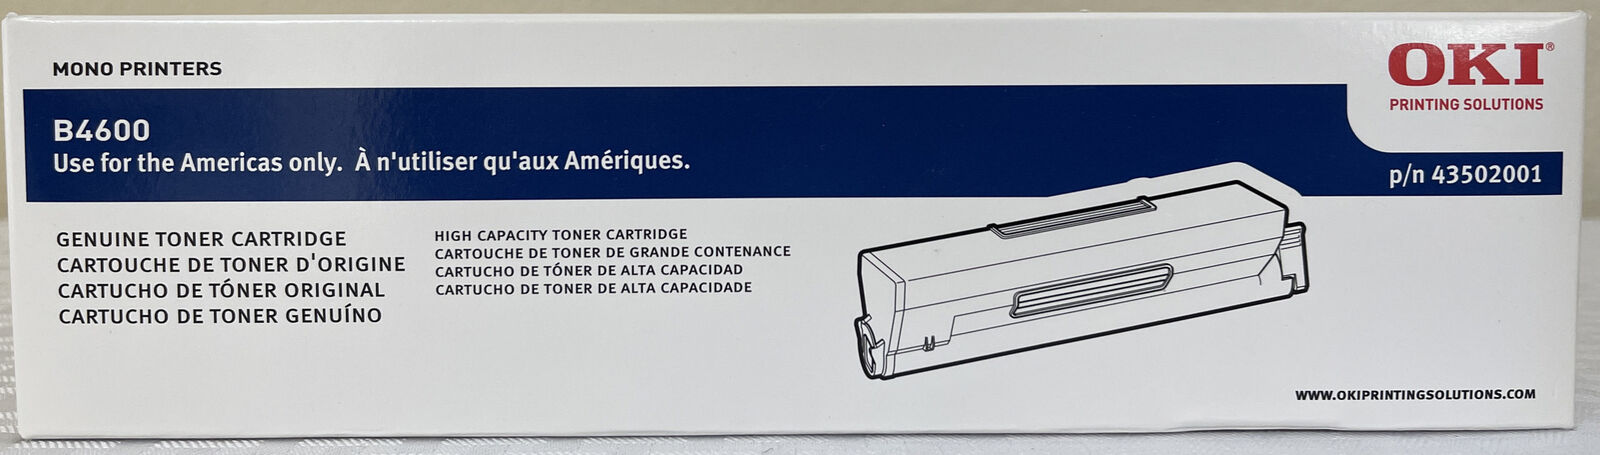 OKI Genuine Mono Printers high Capacity toner Cartridge B4600 P/N: 43502001